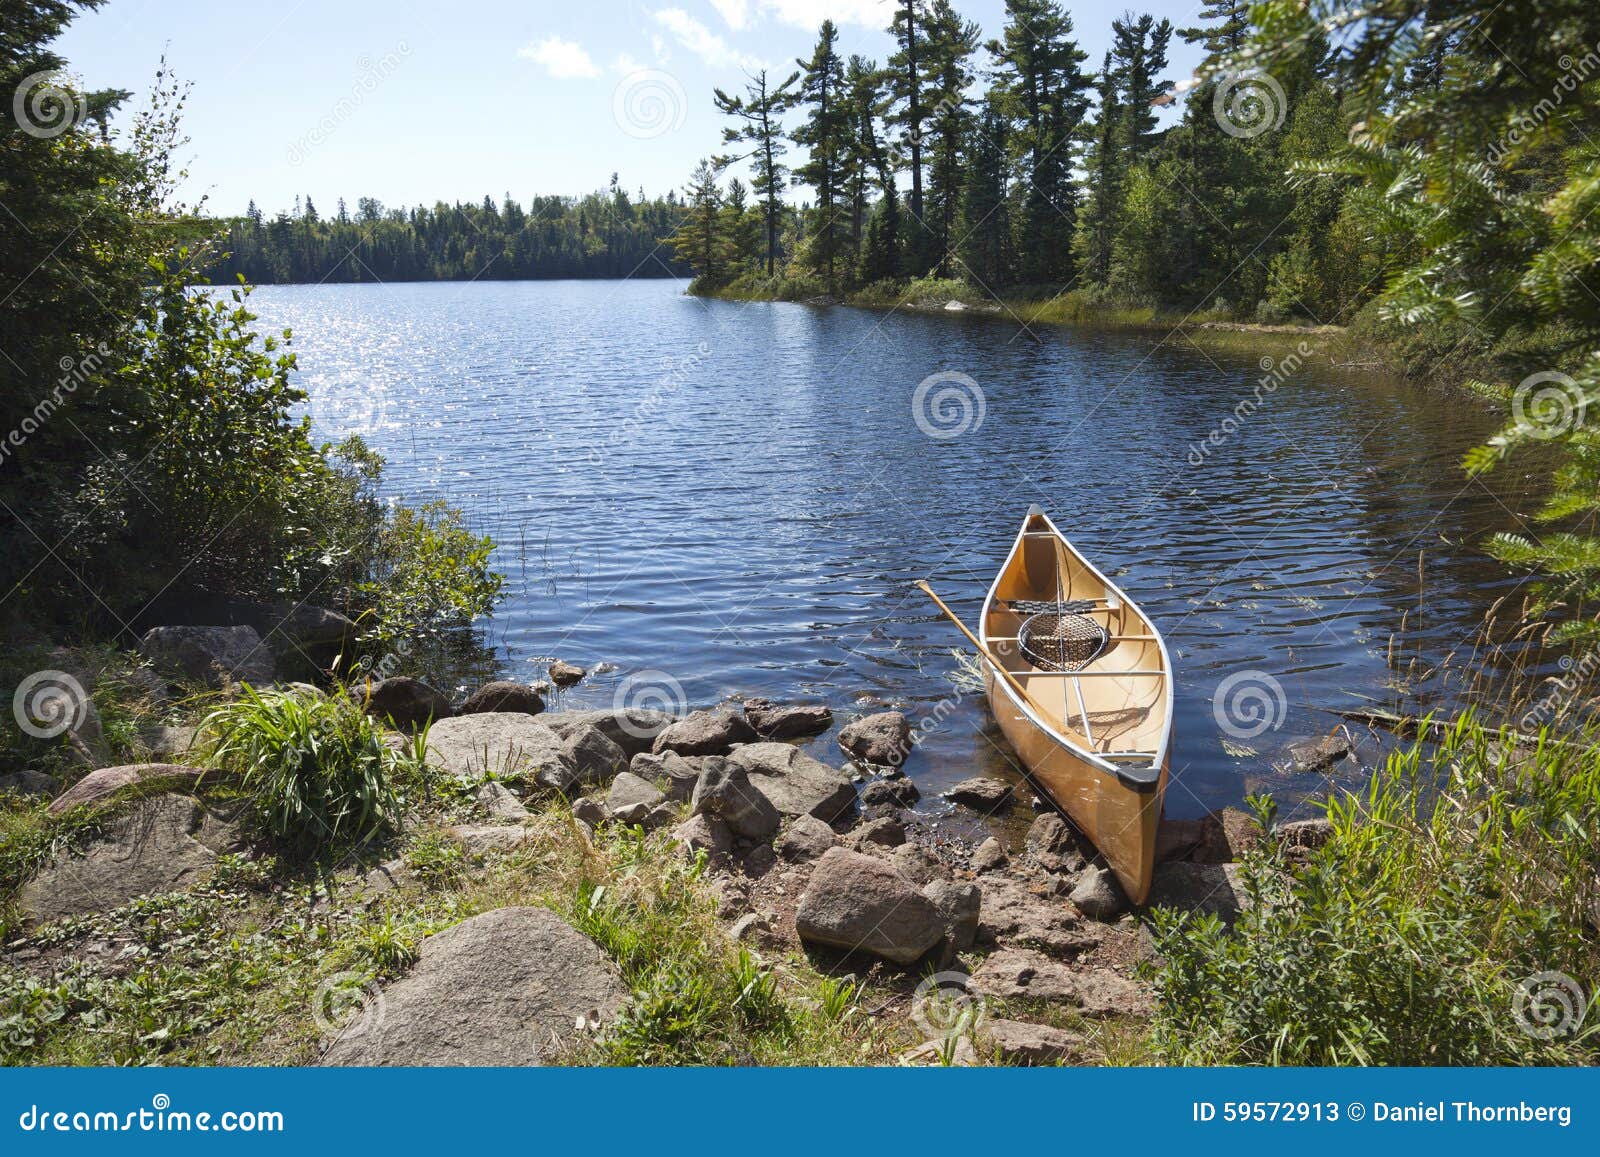 a fisherman's canoe on rocky shore in northern minnesota lake